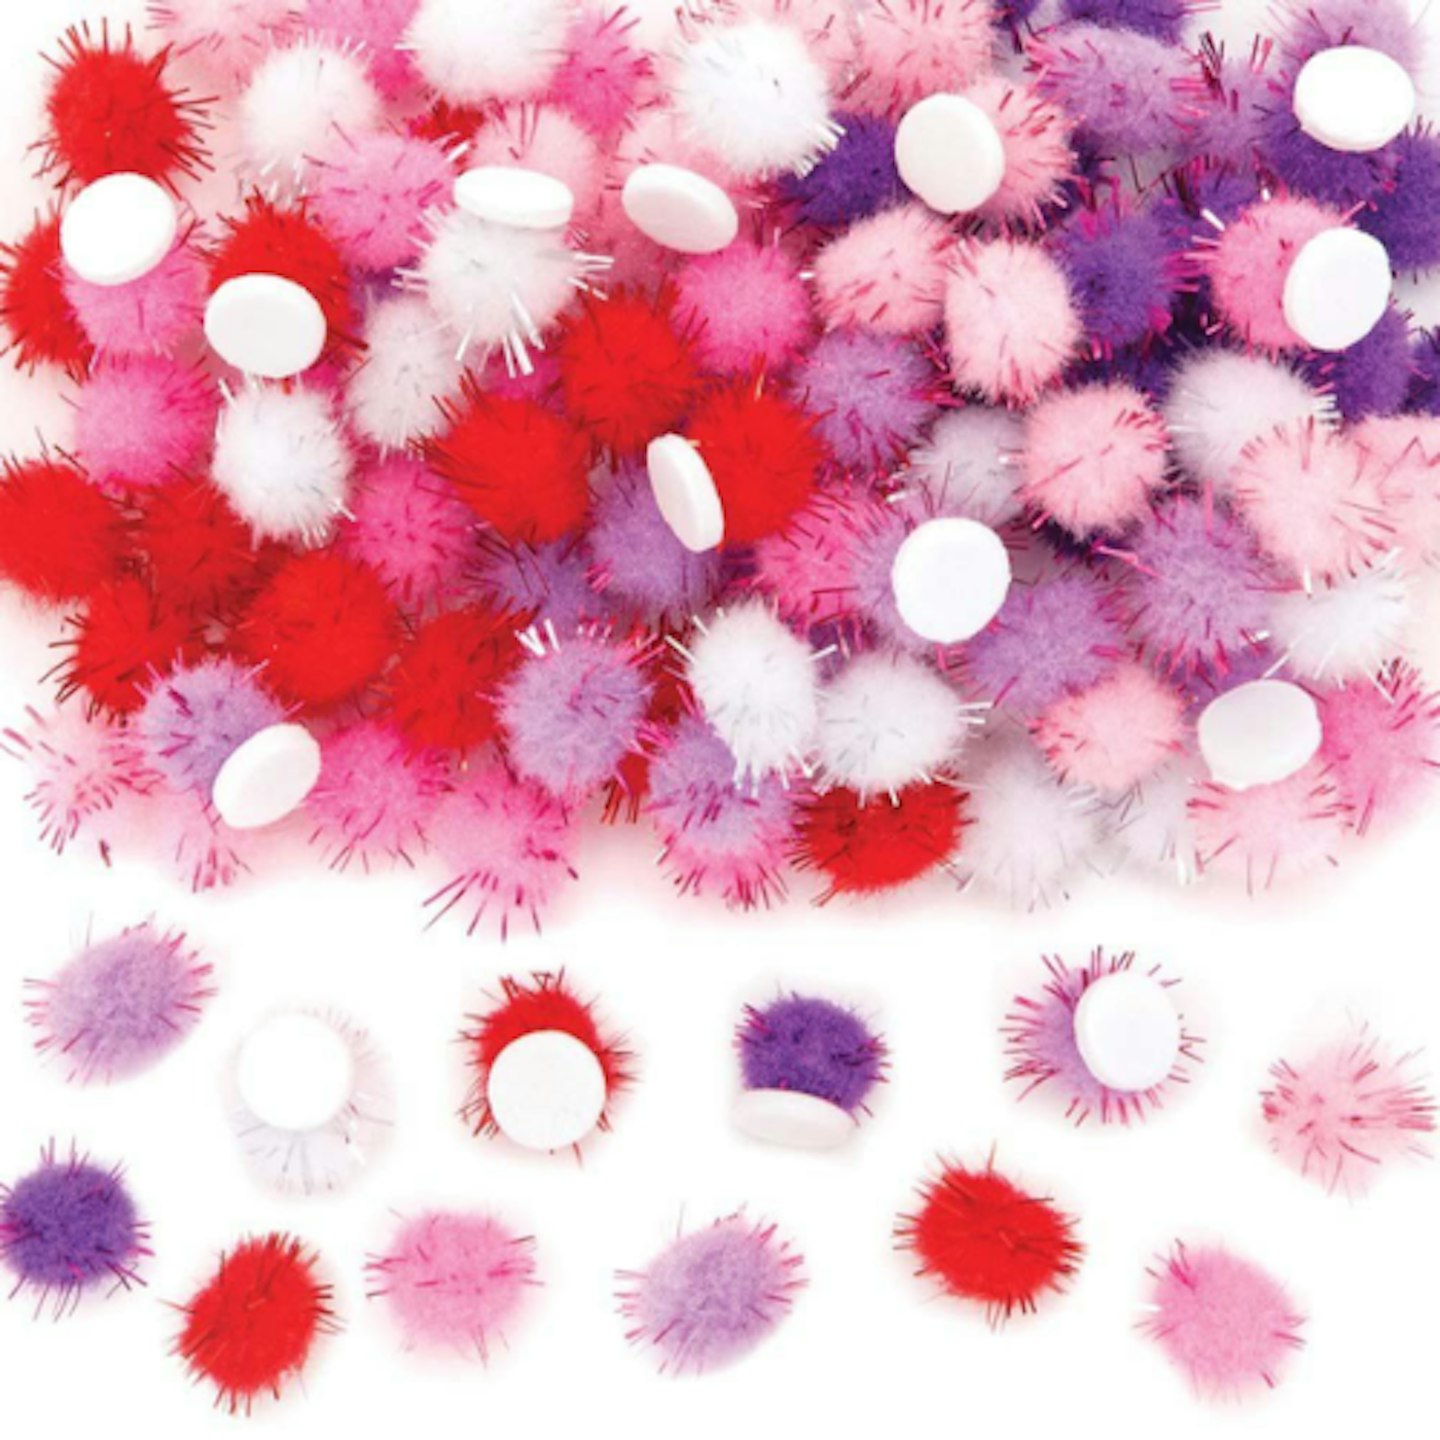 Red Pinks & Purple Self-Adhesive Glitter Pom Poms